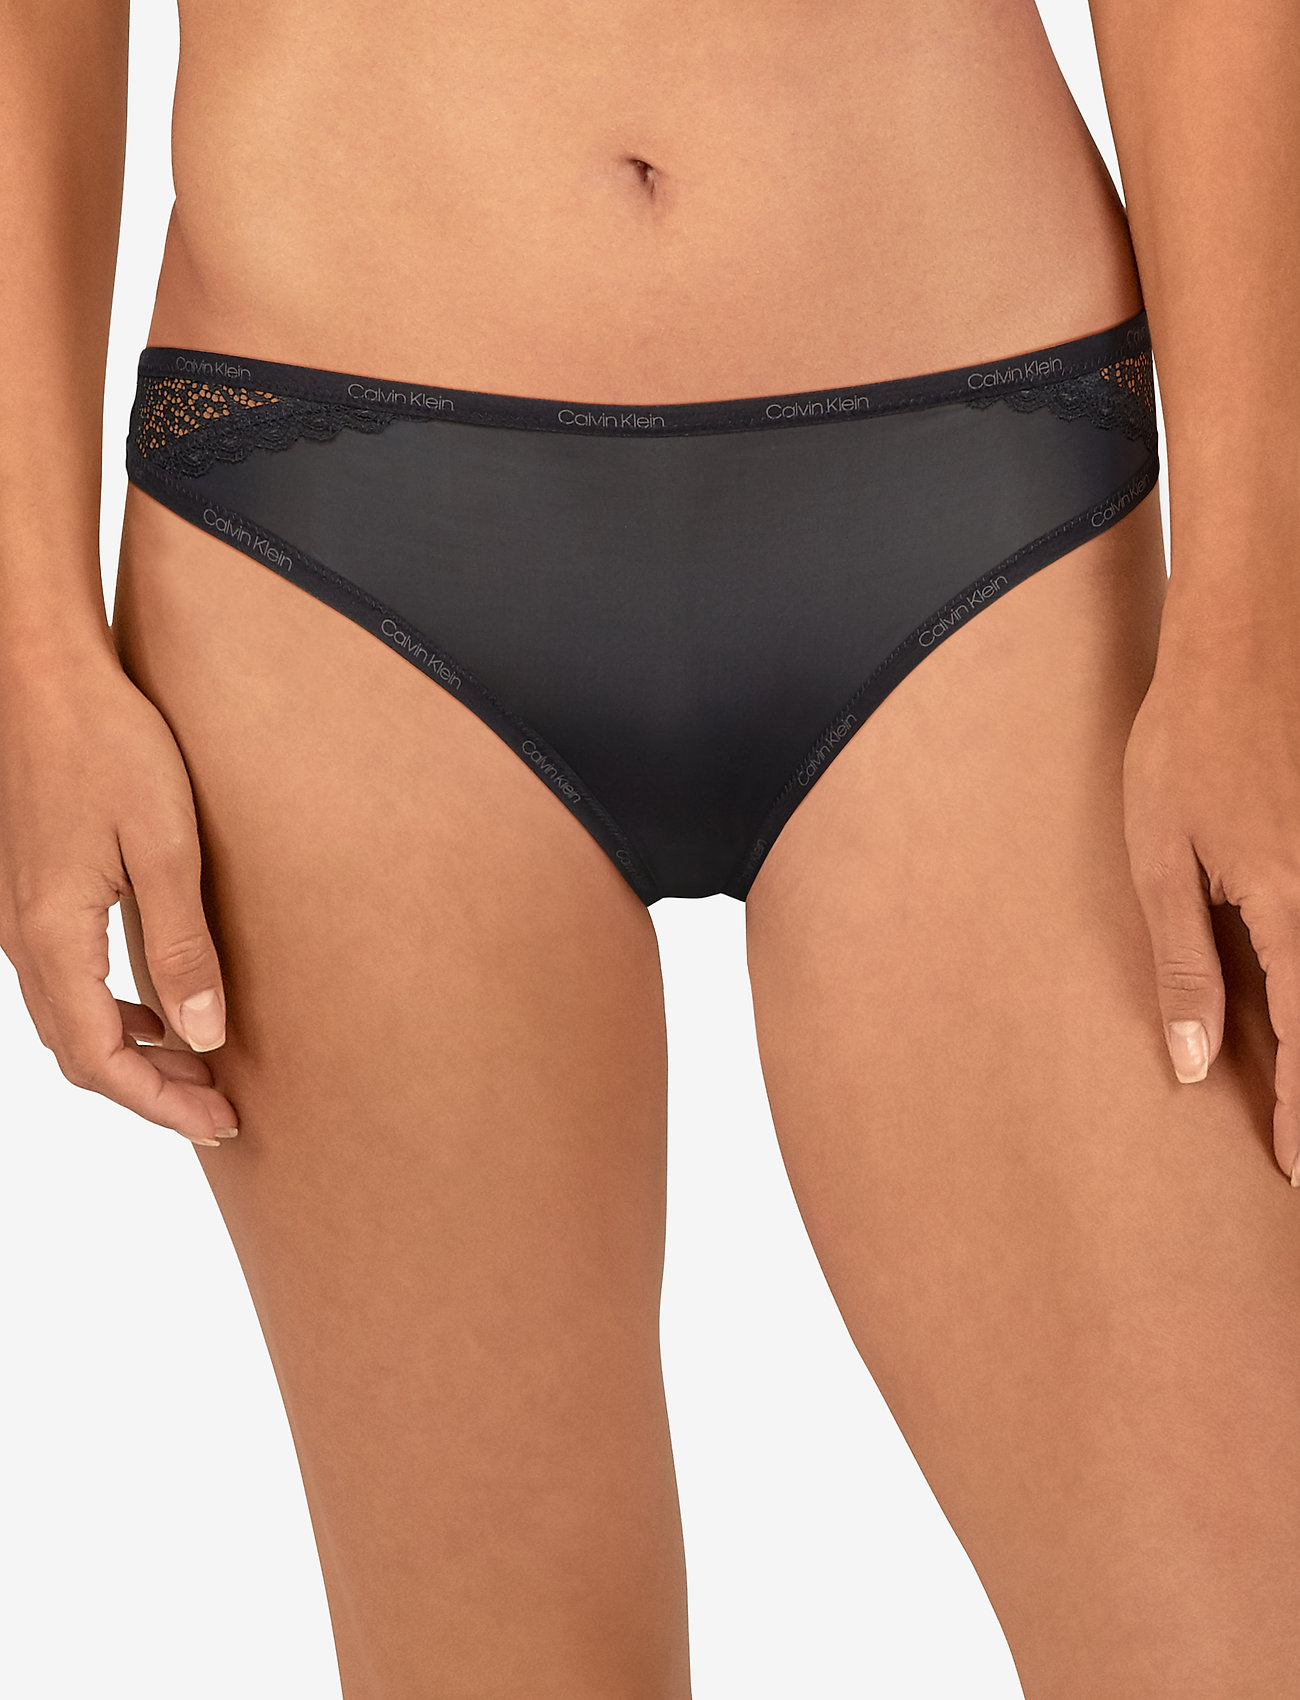 calvin klein brazilian underwear